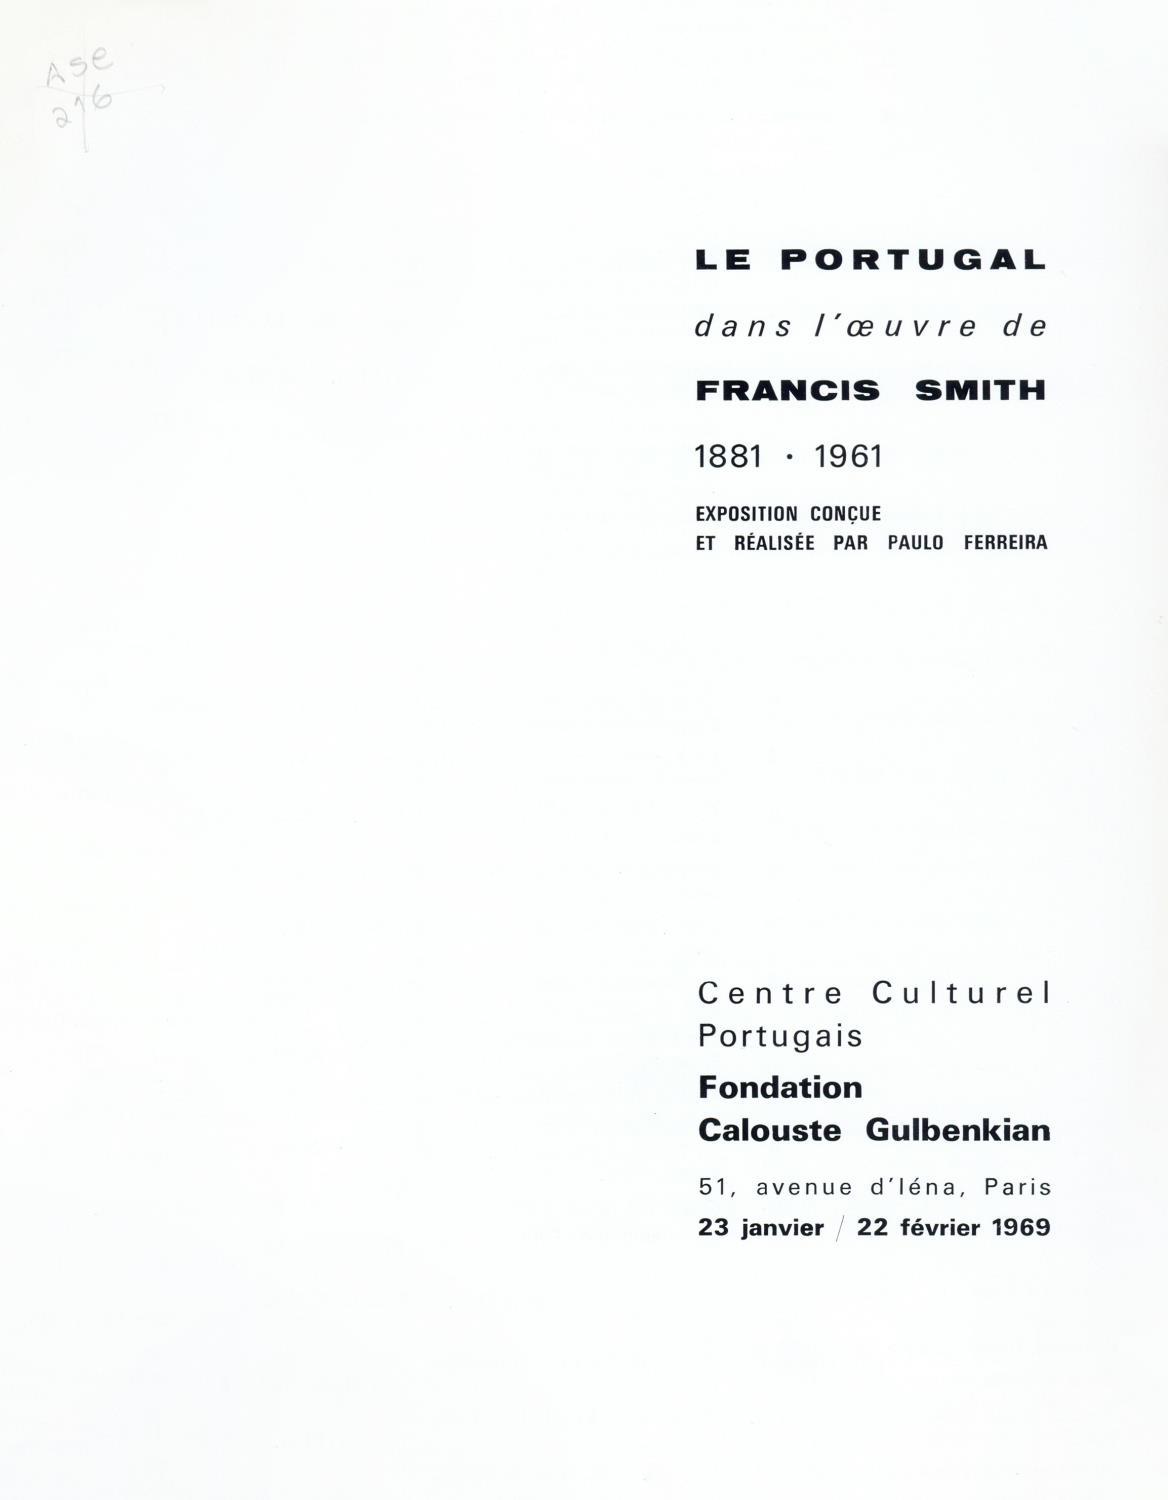 1969_Francis_Smith_catalogo_folha_de_rosto_BI3563